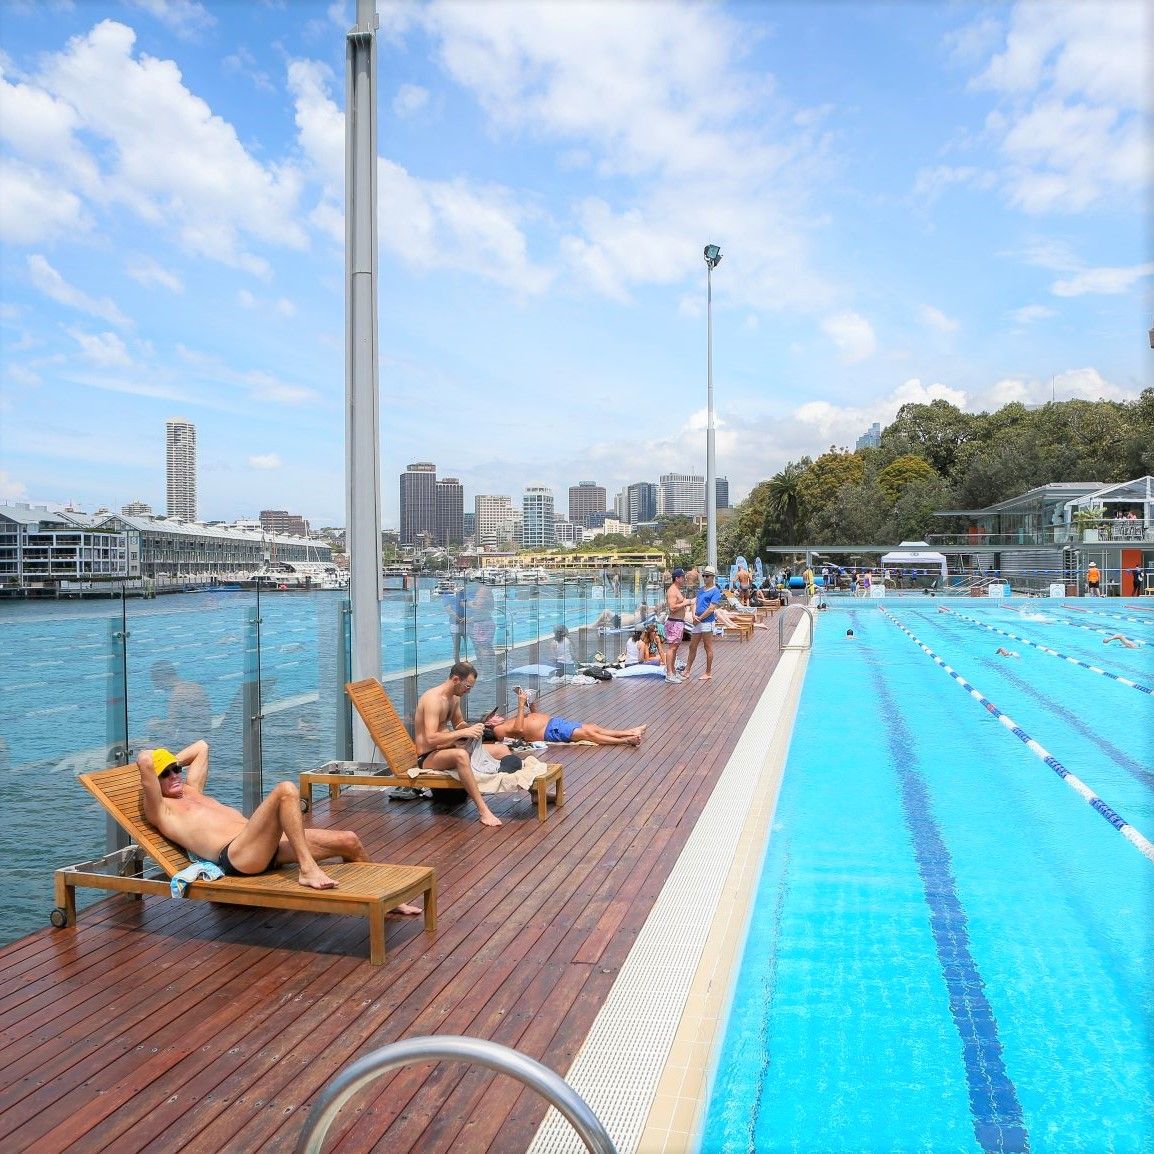 Swimming pools and aquatic centres Sydney - City of Sydney